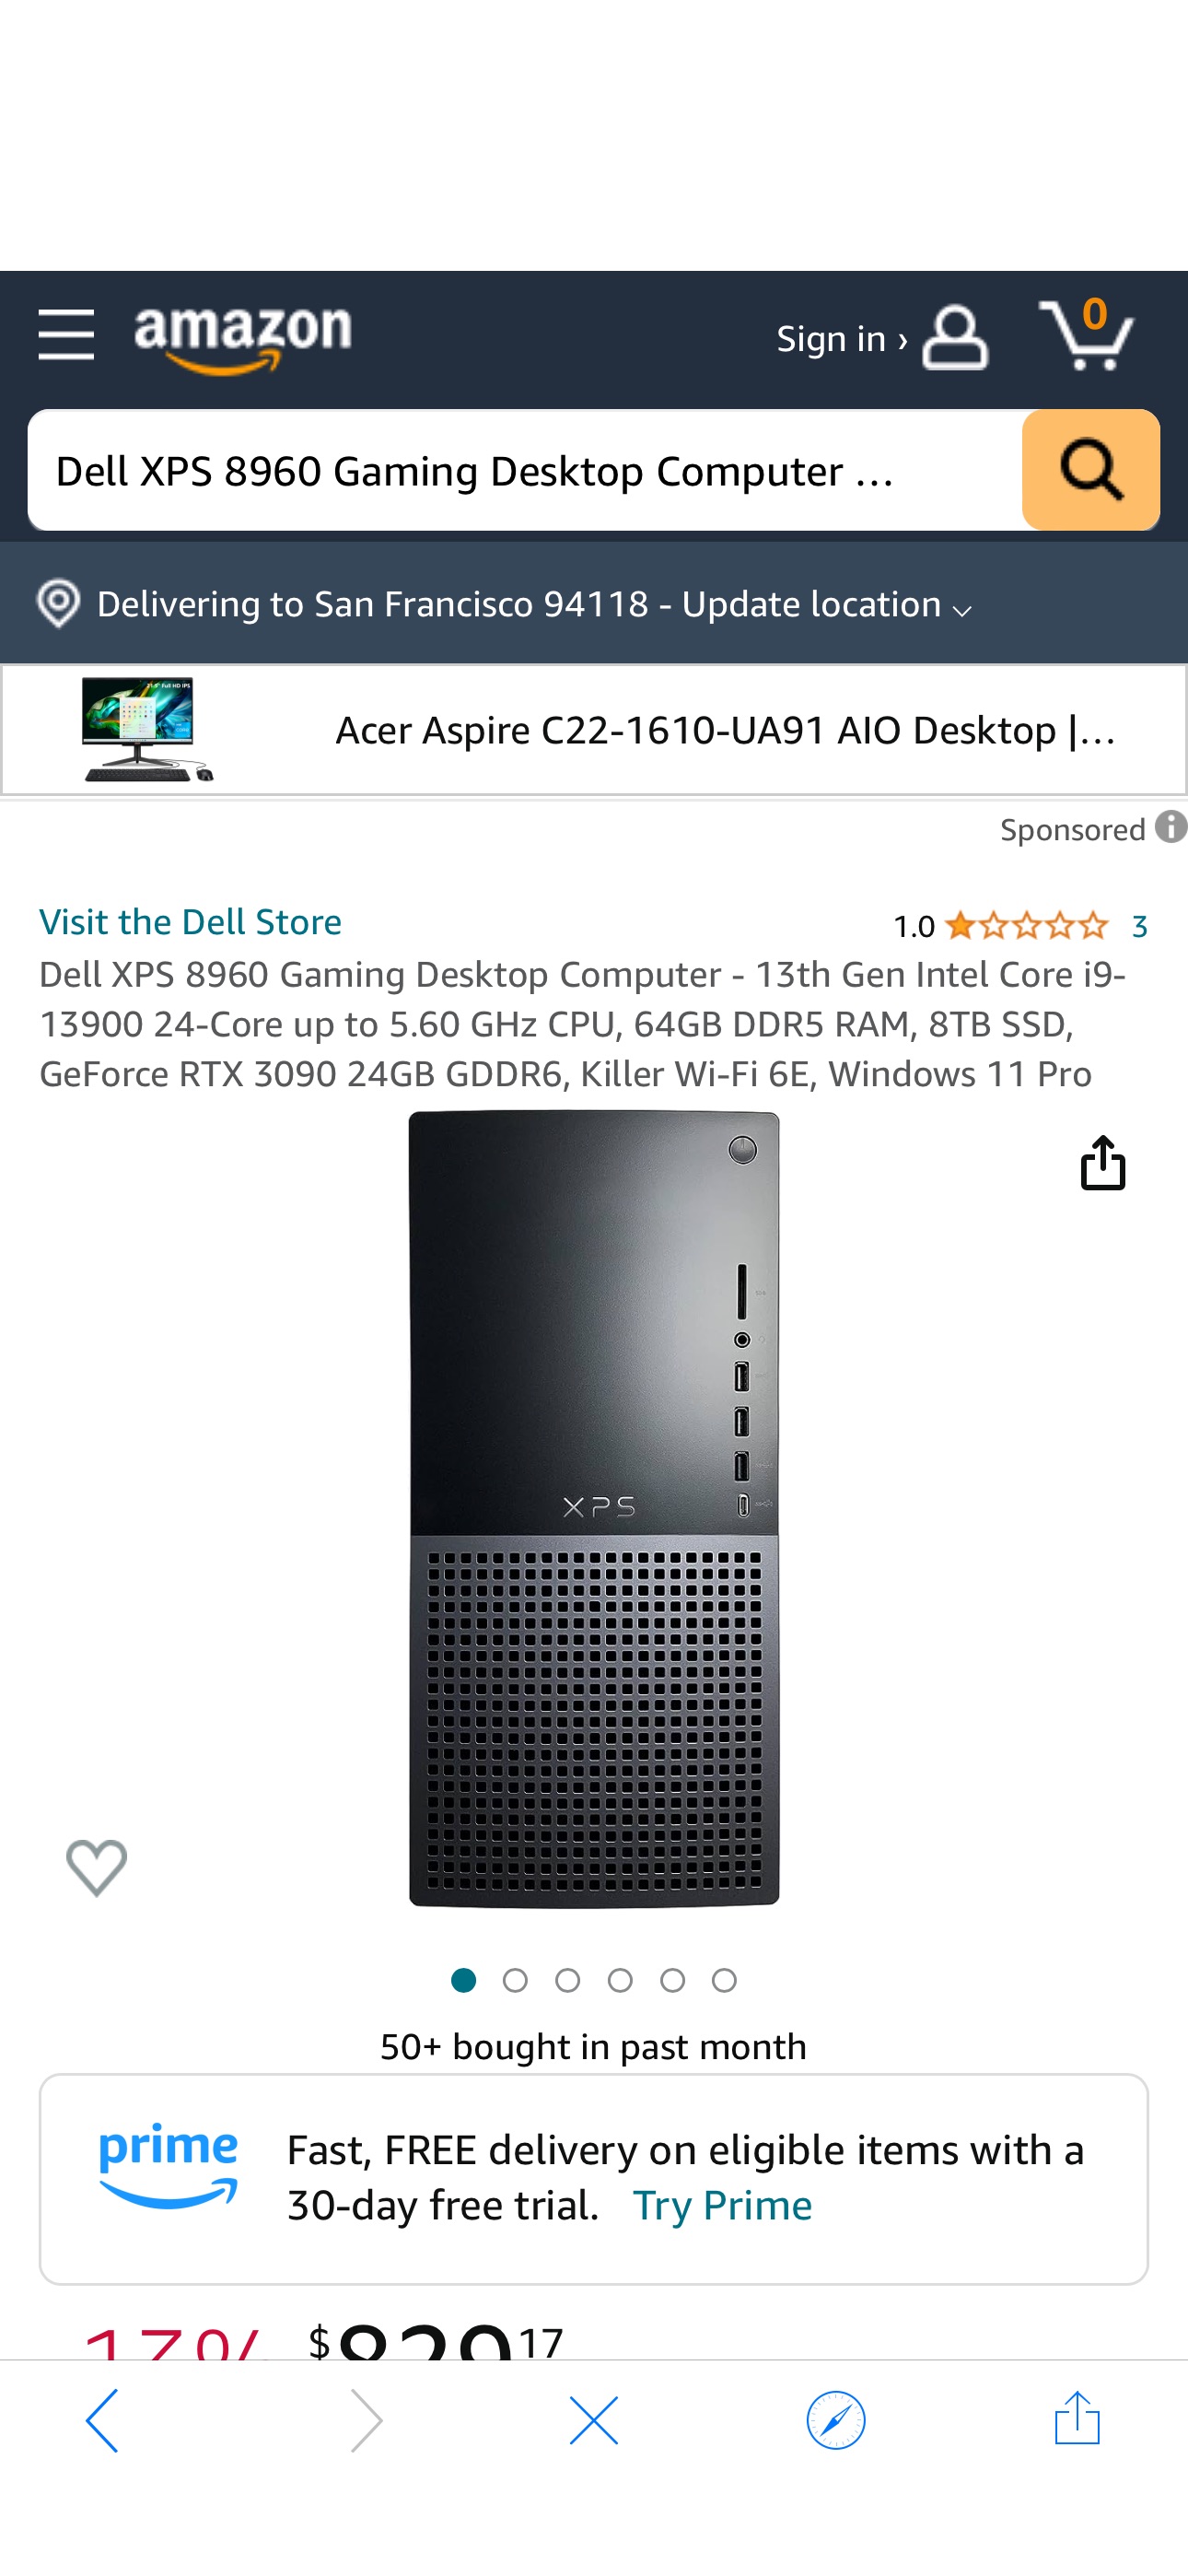 Amazon.com: Dell XPS 8960 Gaming Desktop Computer - 13th Gen Intel Core i9-13900 24-Core up to 5.60 GHz CPU, 64GB DDR5 RAM, 8TB SSD, GeForce RTX 3090 24GB GDDR6, Killer Wi-Fi 6E, Windows 11 Pro : Elec